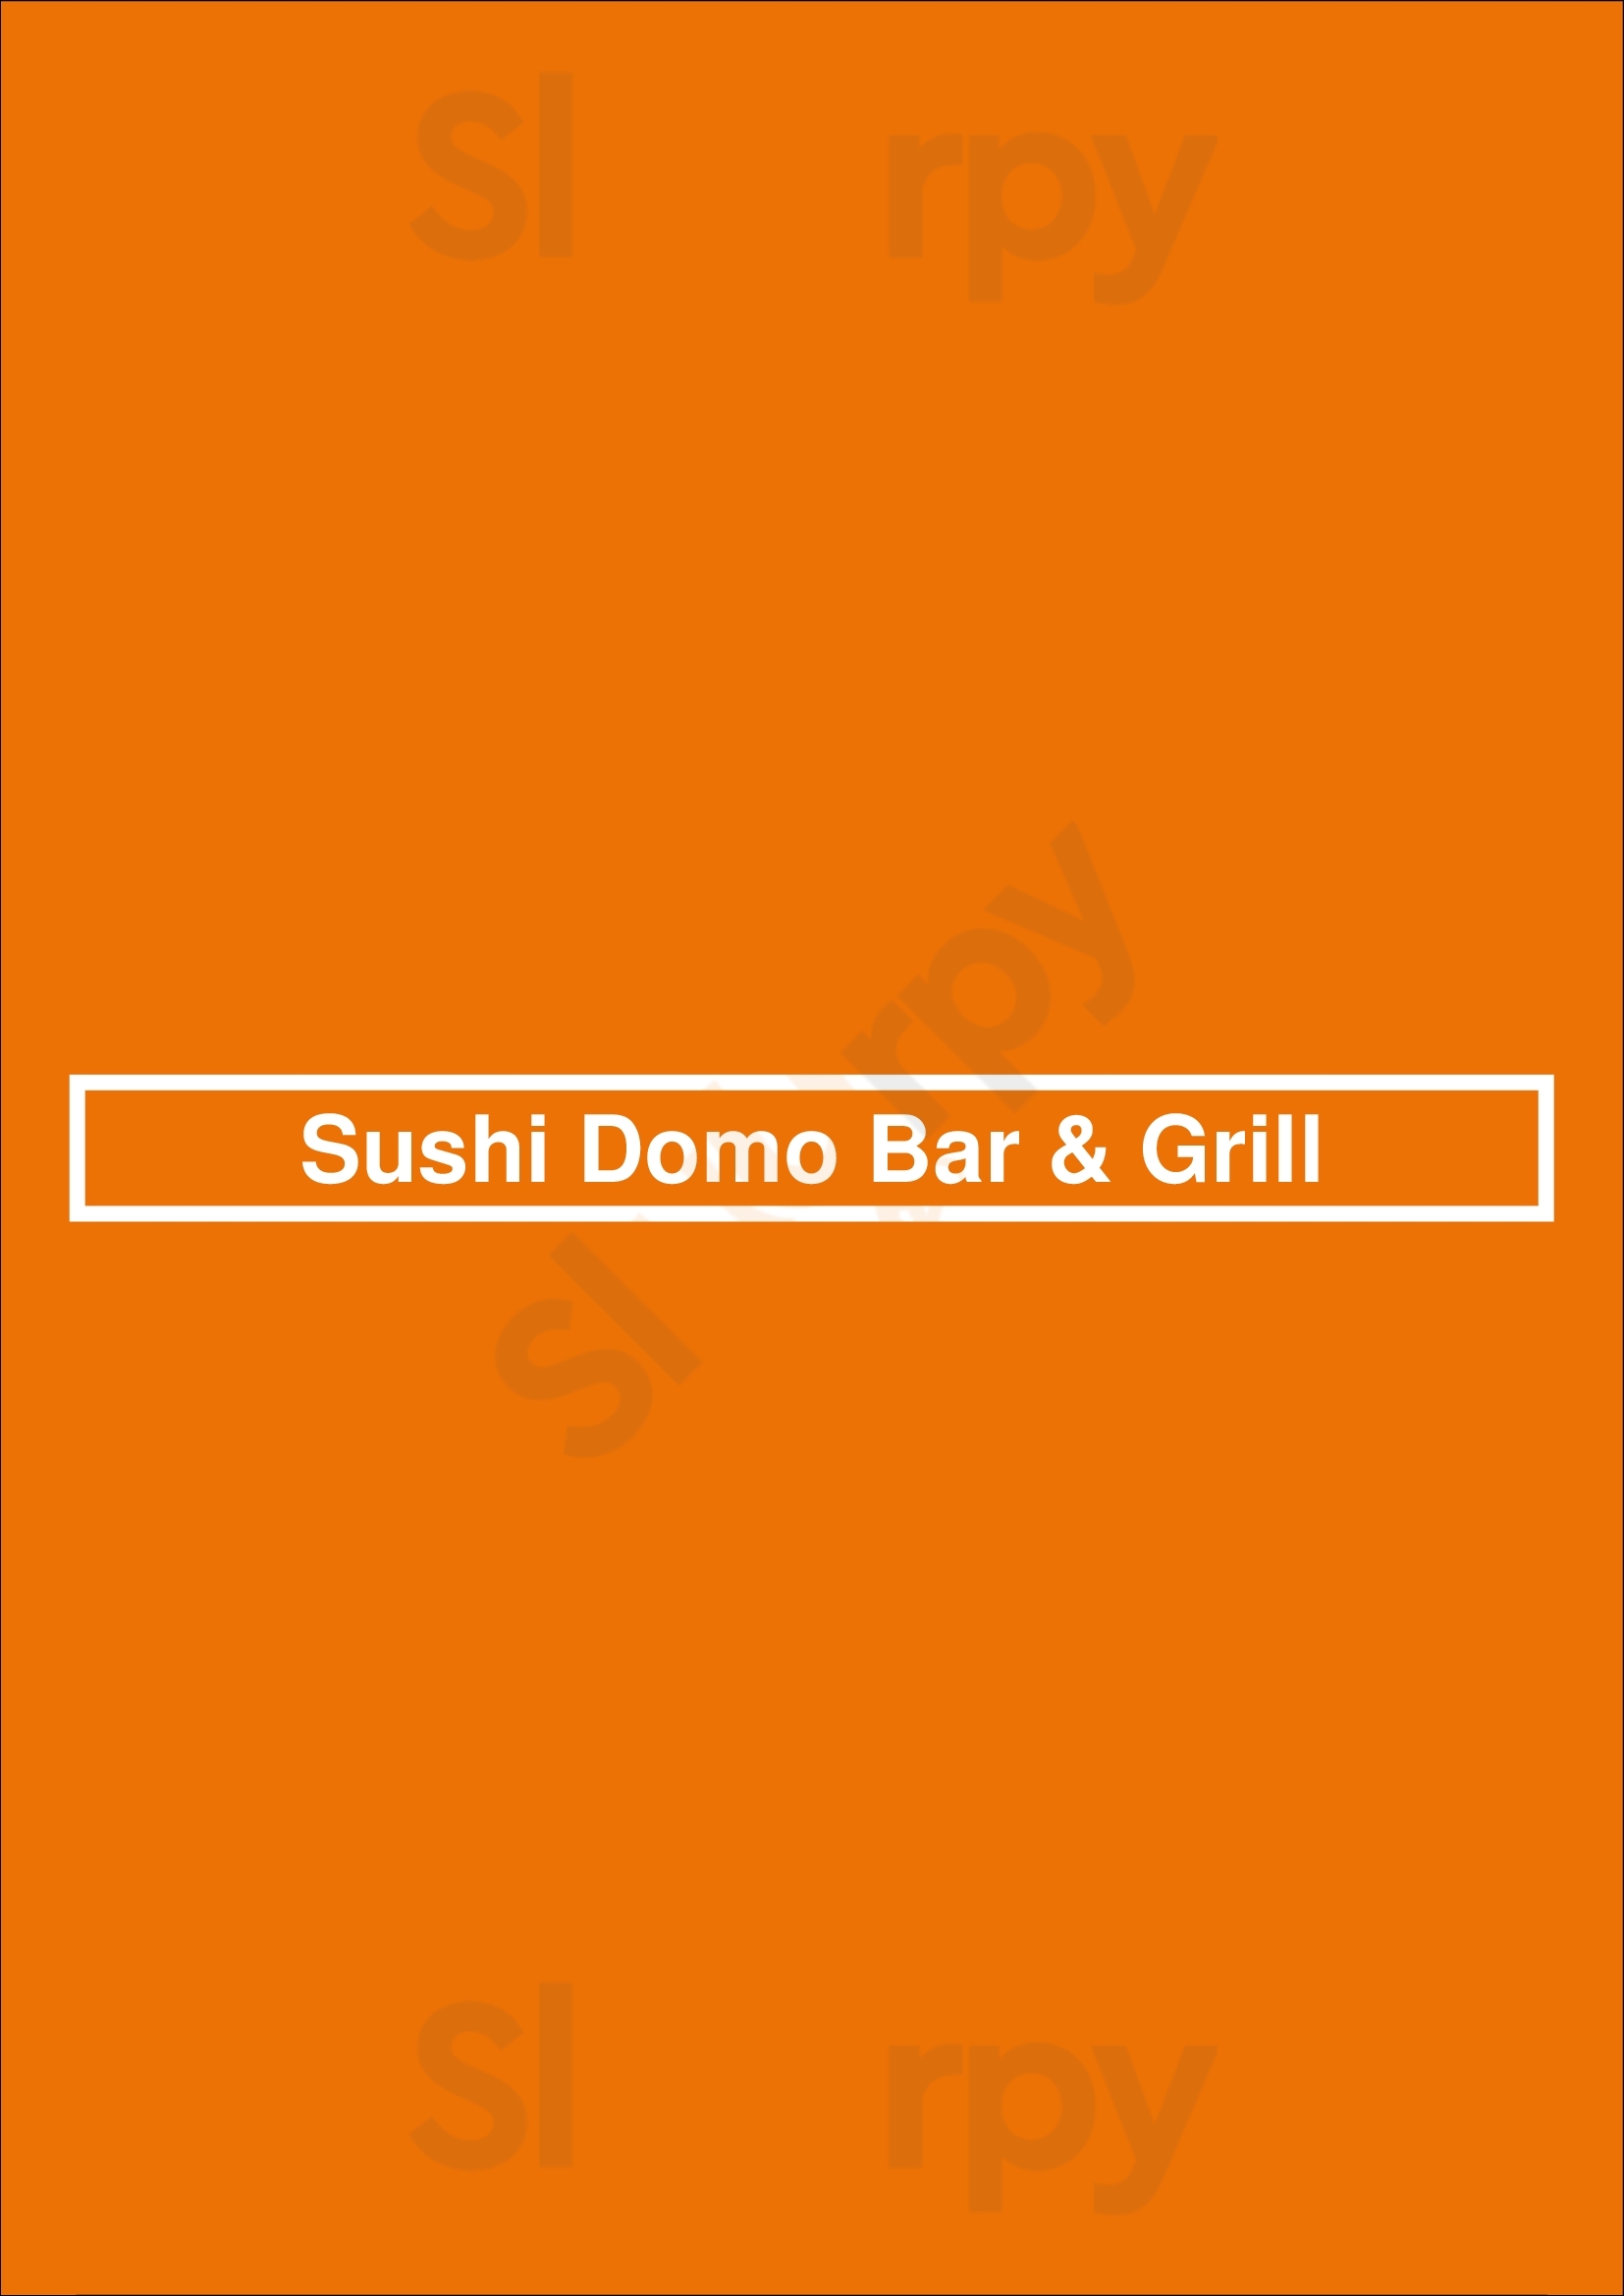 Sushi Domo Bar & Grill Arlington Menu - 1